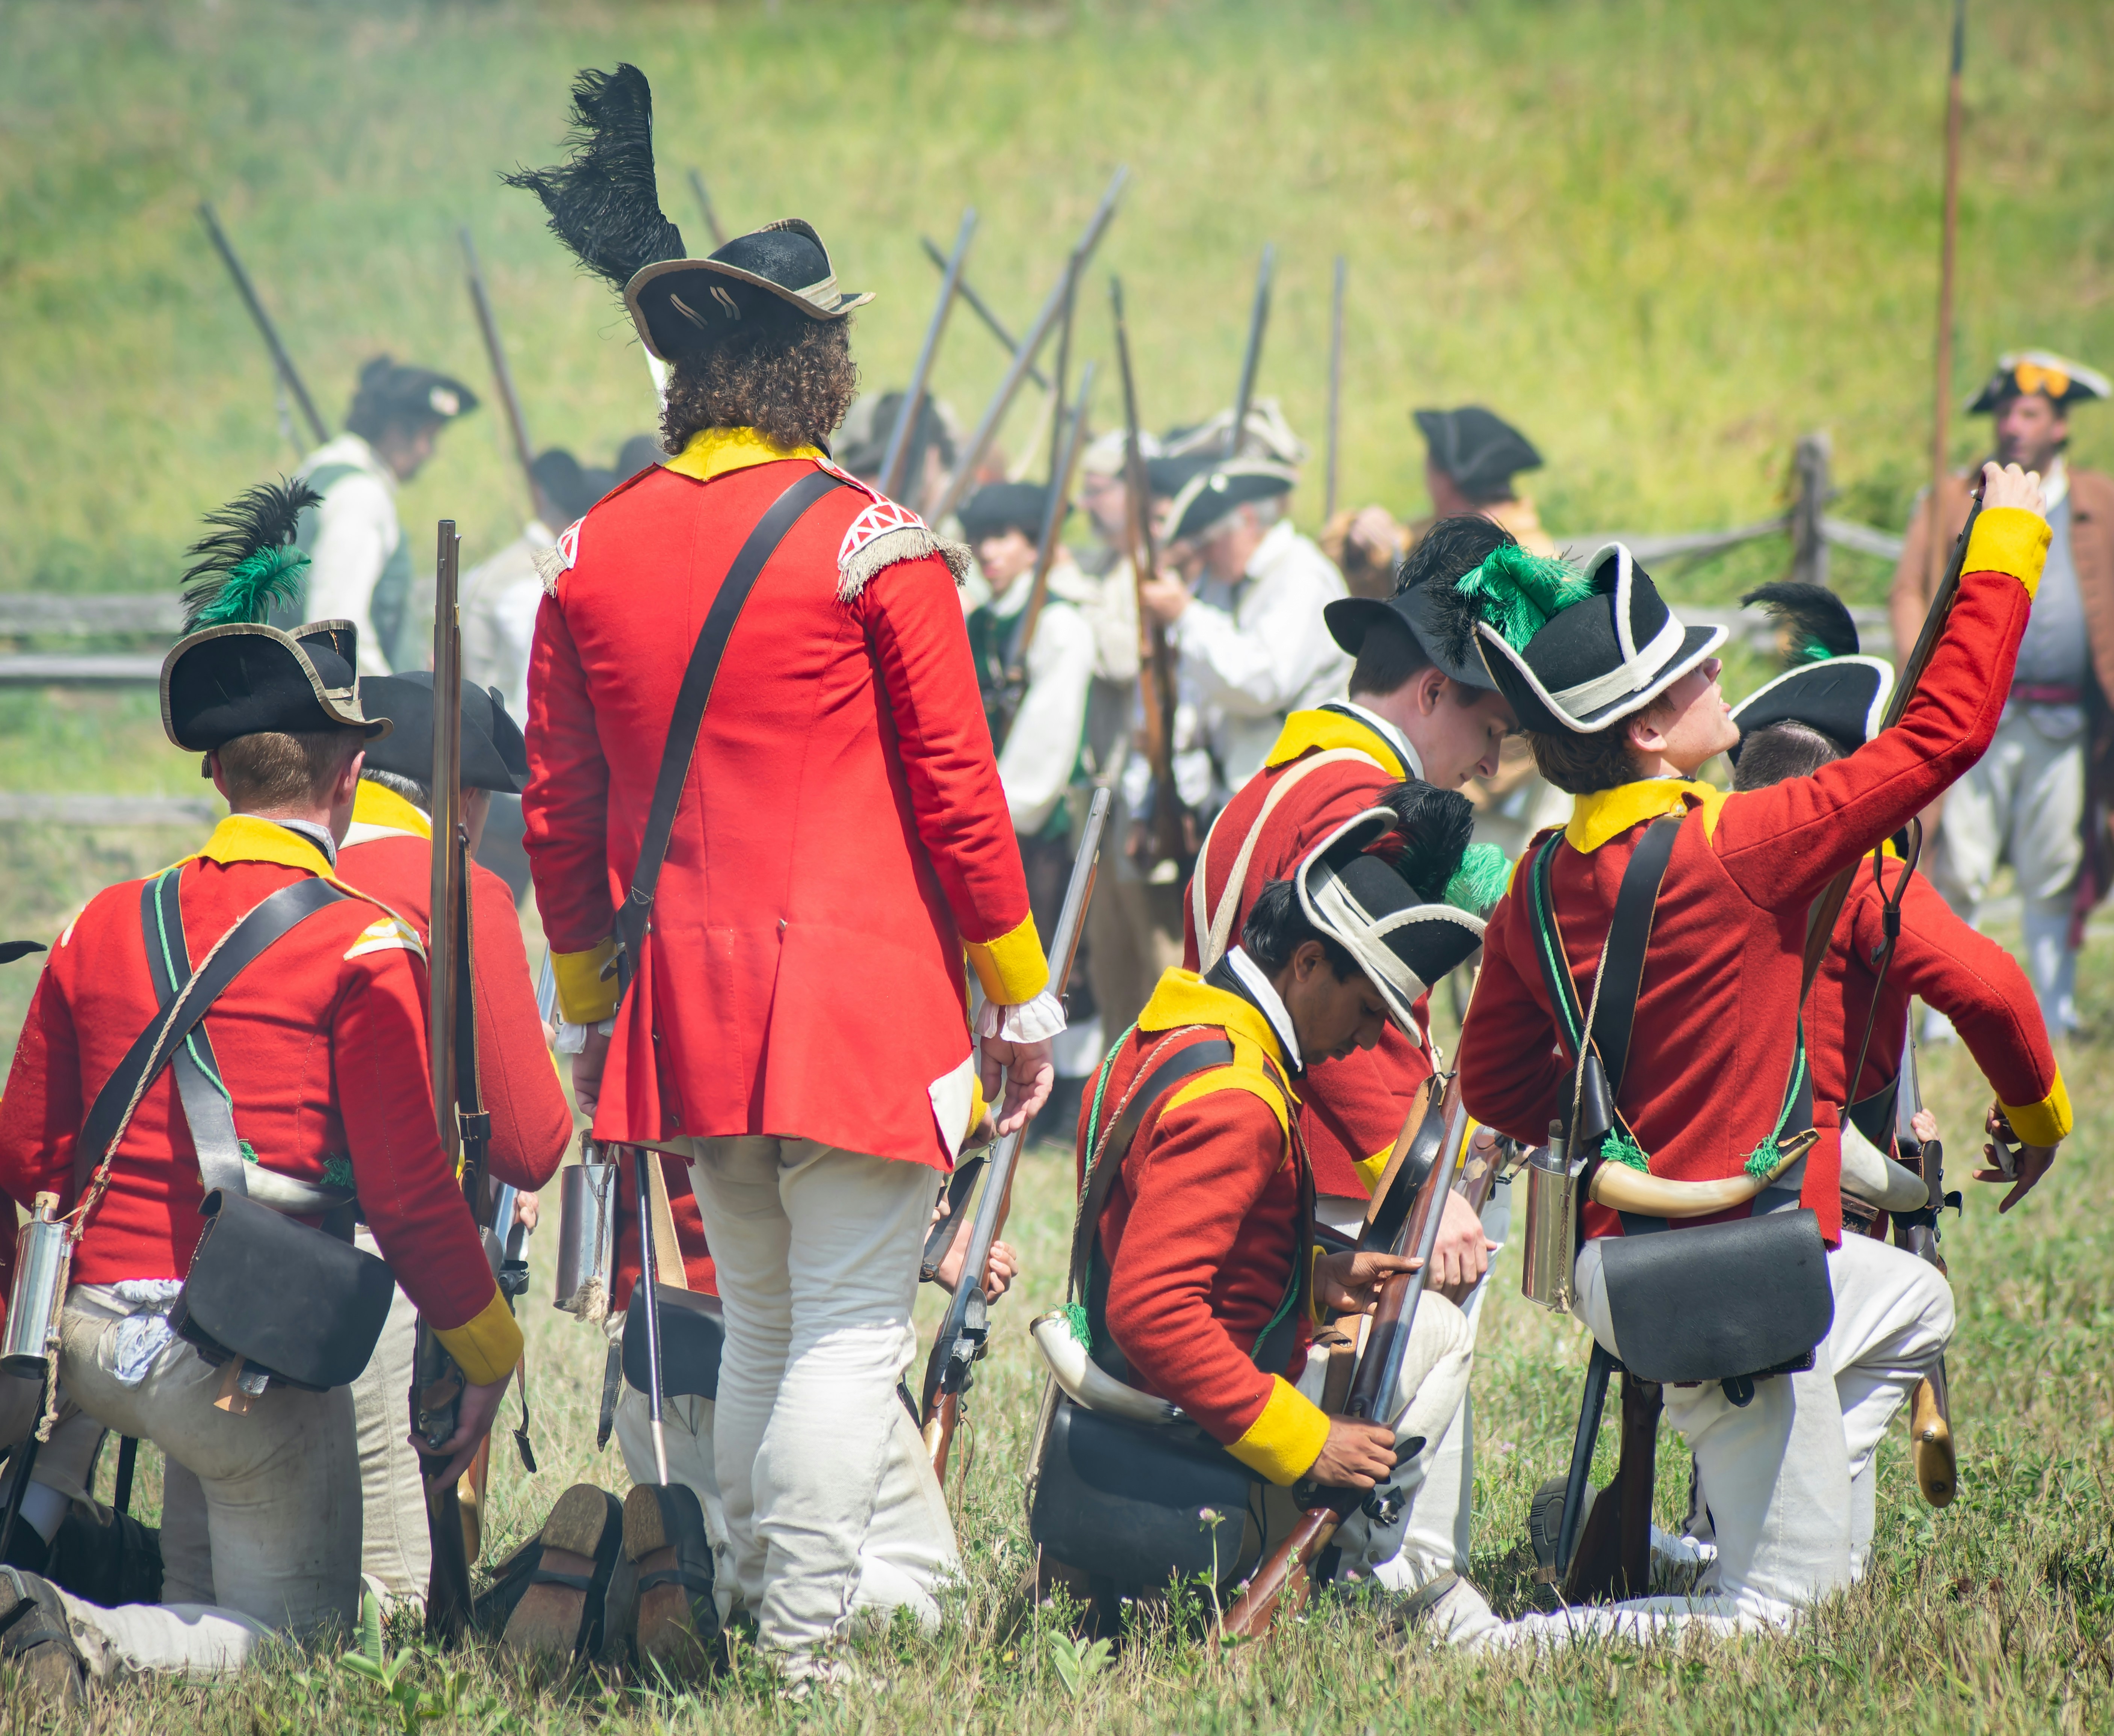 Reloading muskets in the open battlefield... mock battle (circa 1776, American Revolutionary War Reenactment at Old Sturbridge Village, Aug. 2022)